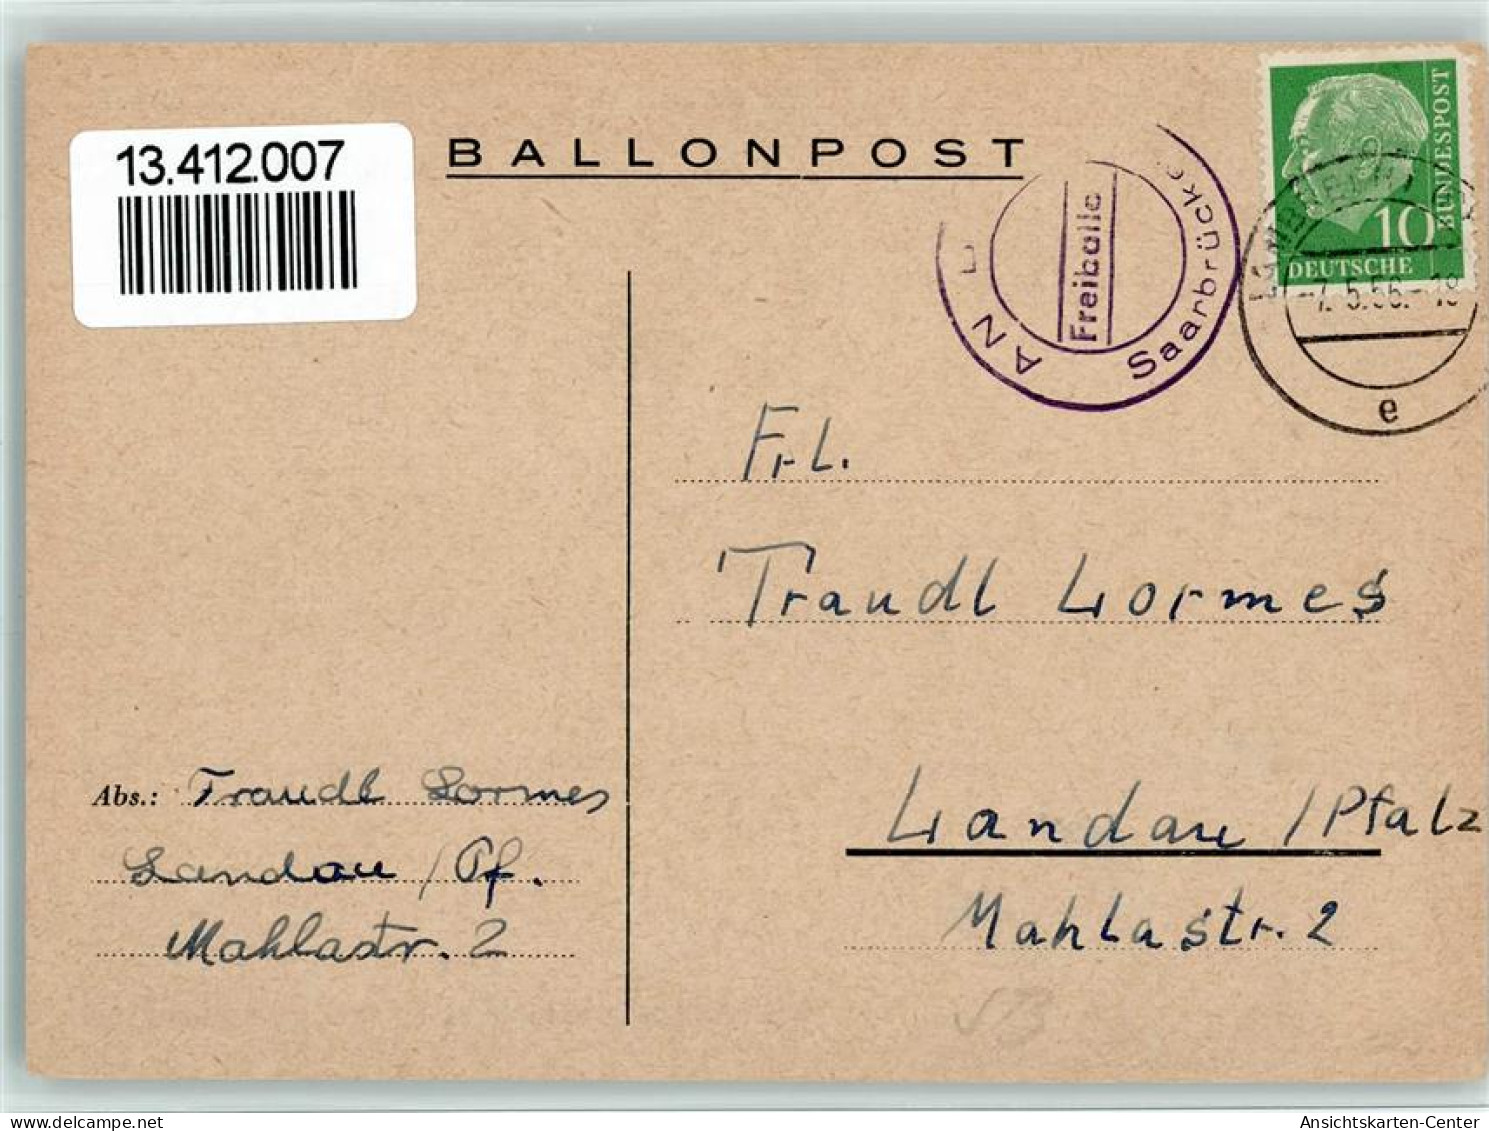 13412007 - Ballonpost Freiiballon Saarbruecken 1956 - Globos